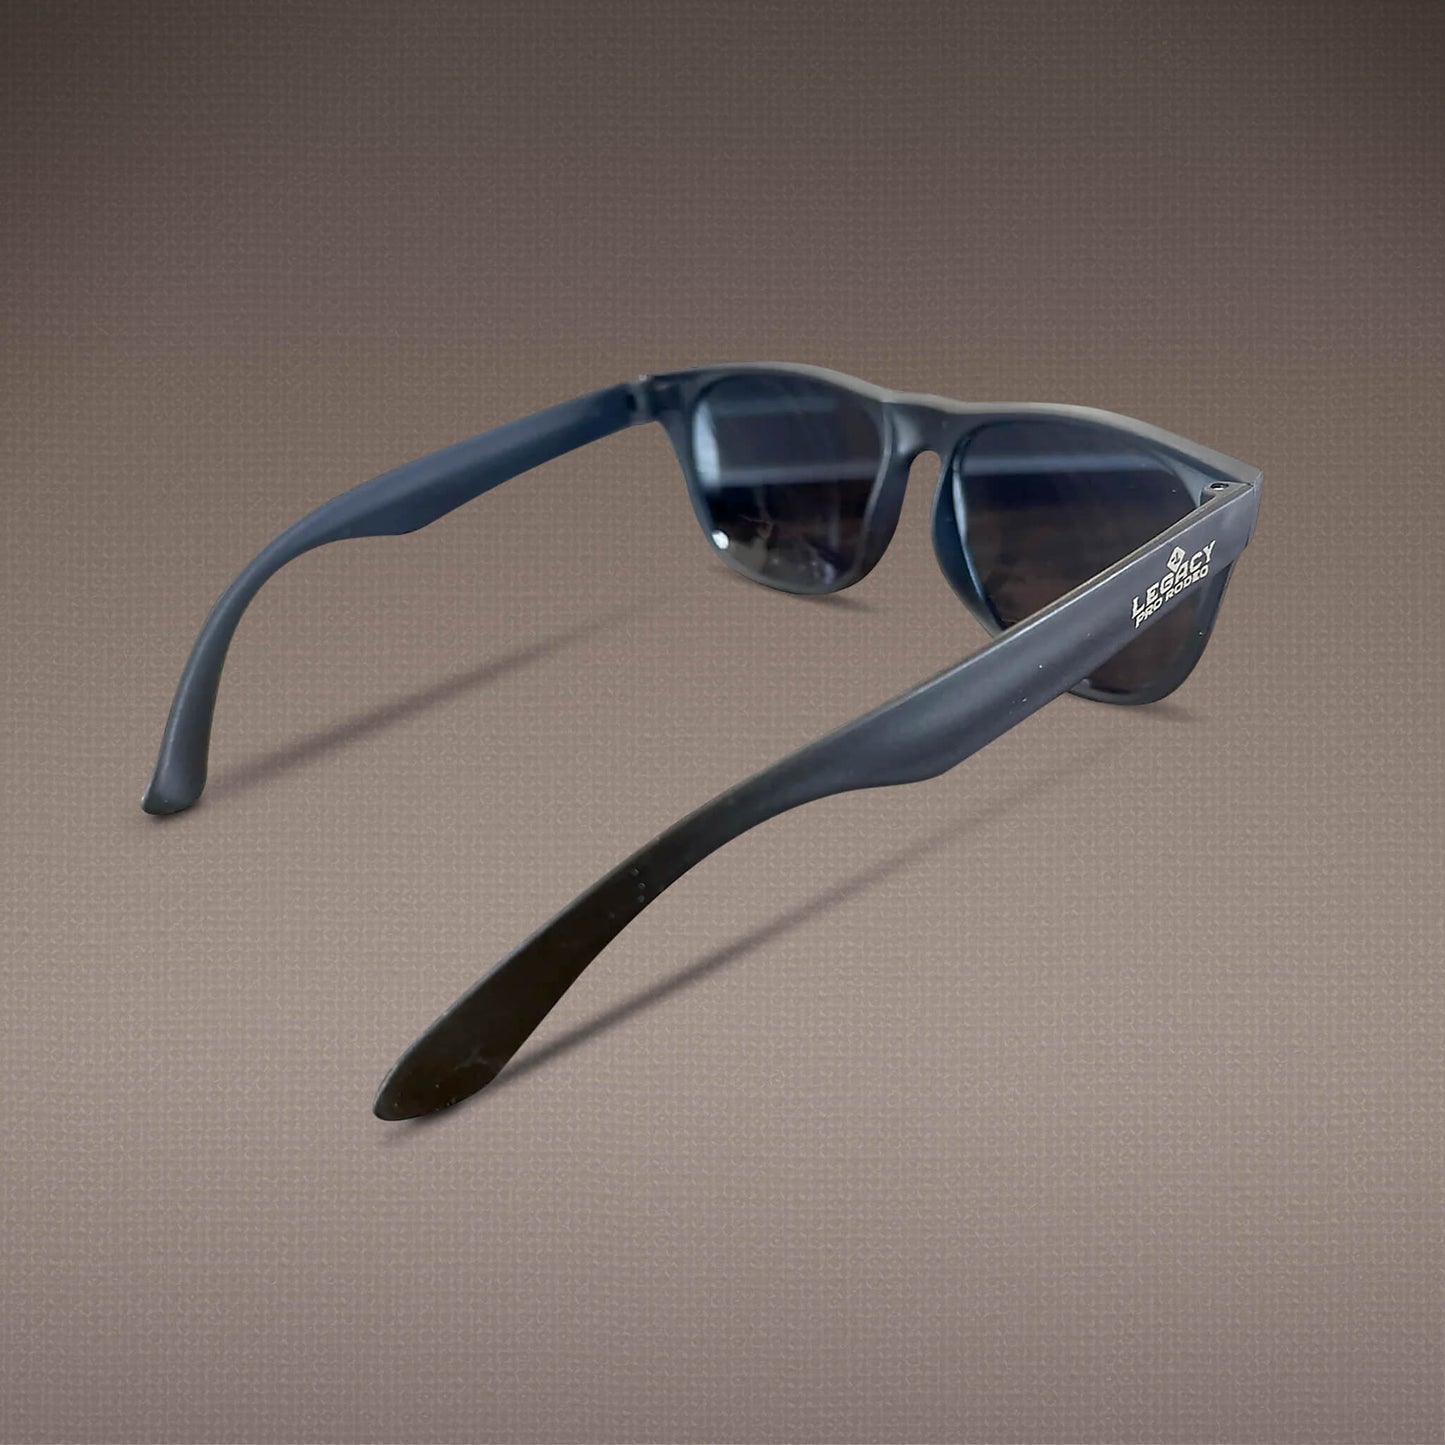 Legacy Pro Rodeo Sunglasses